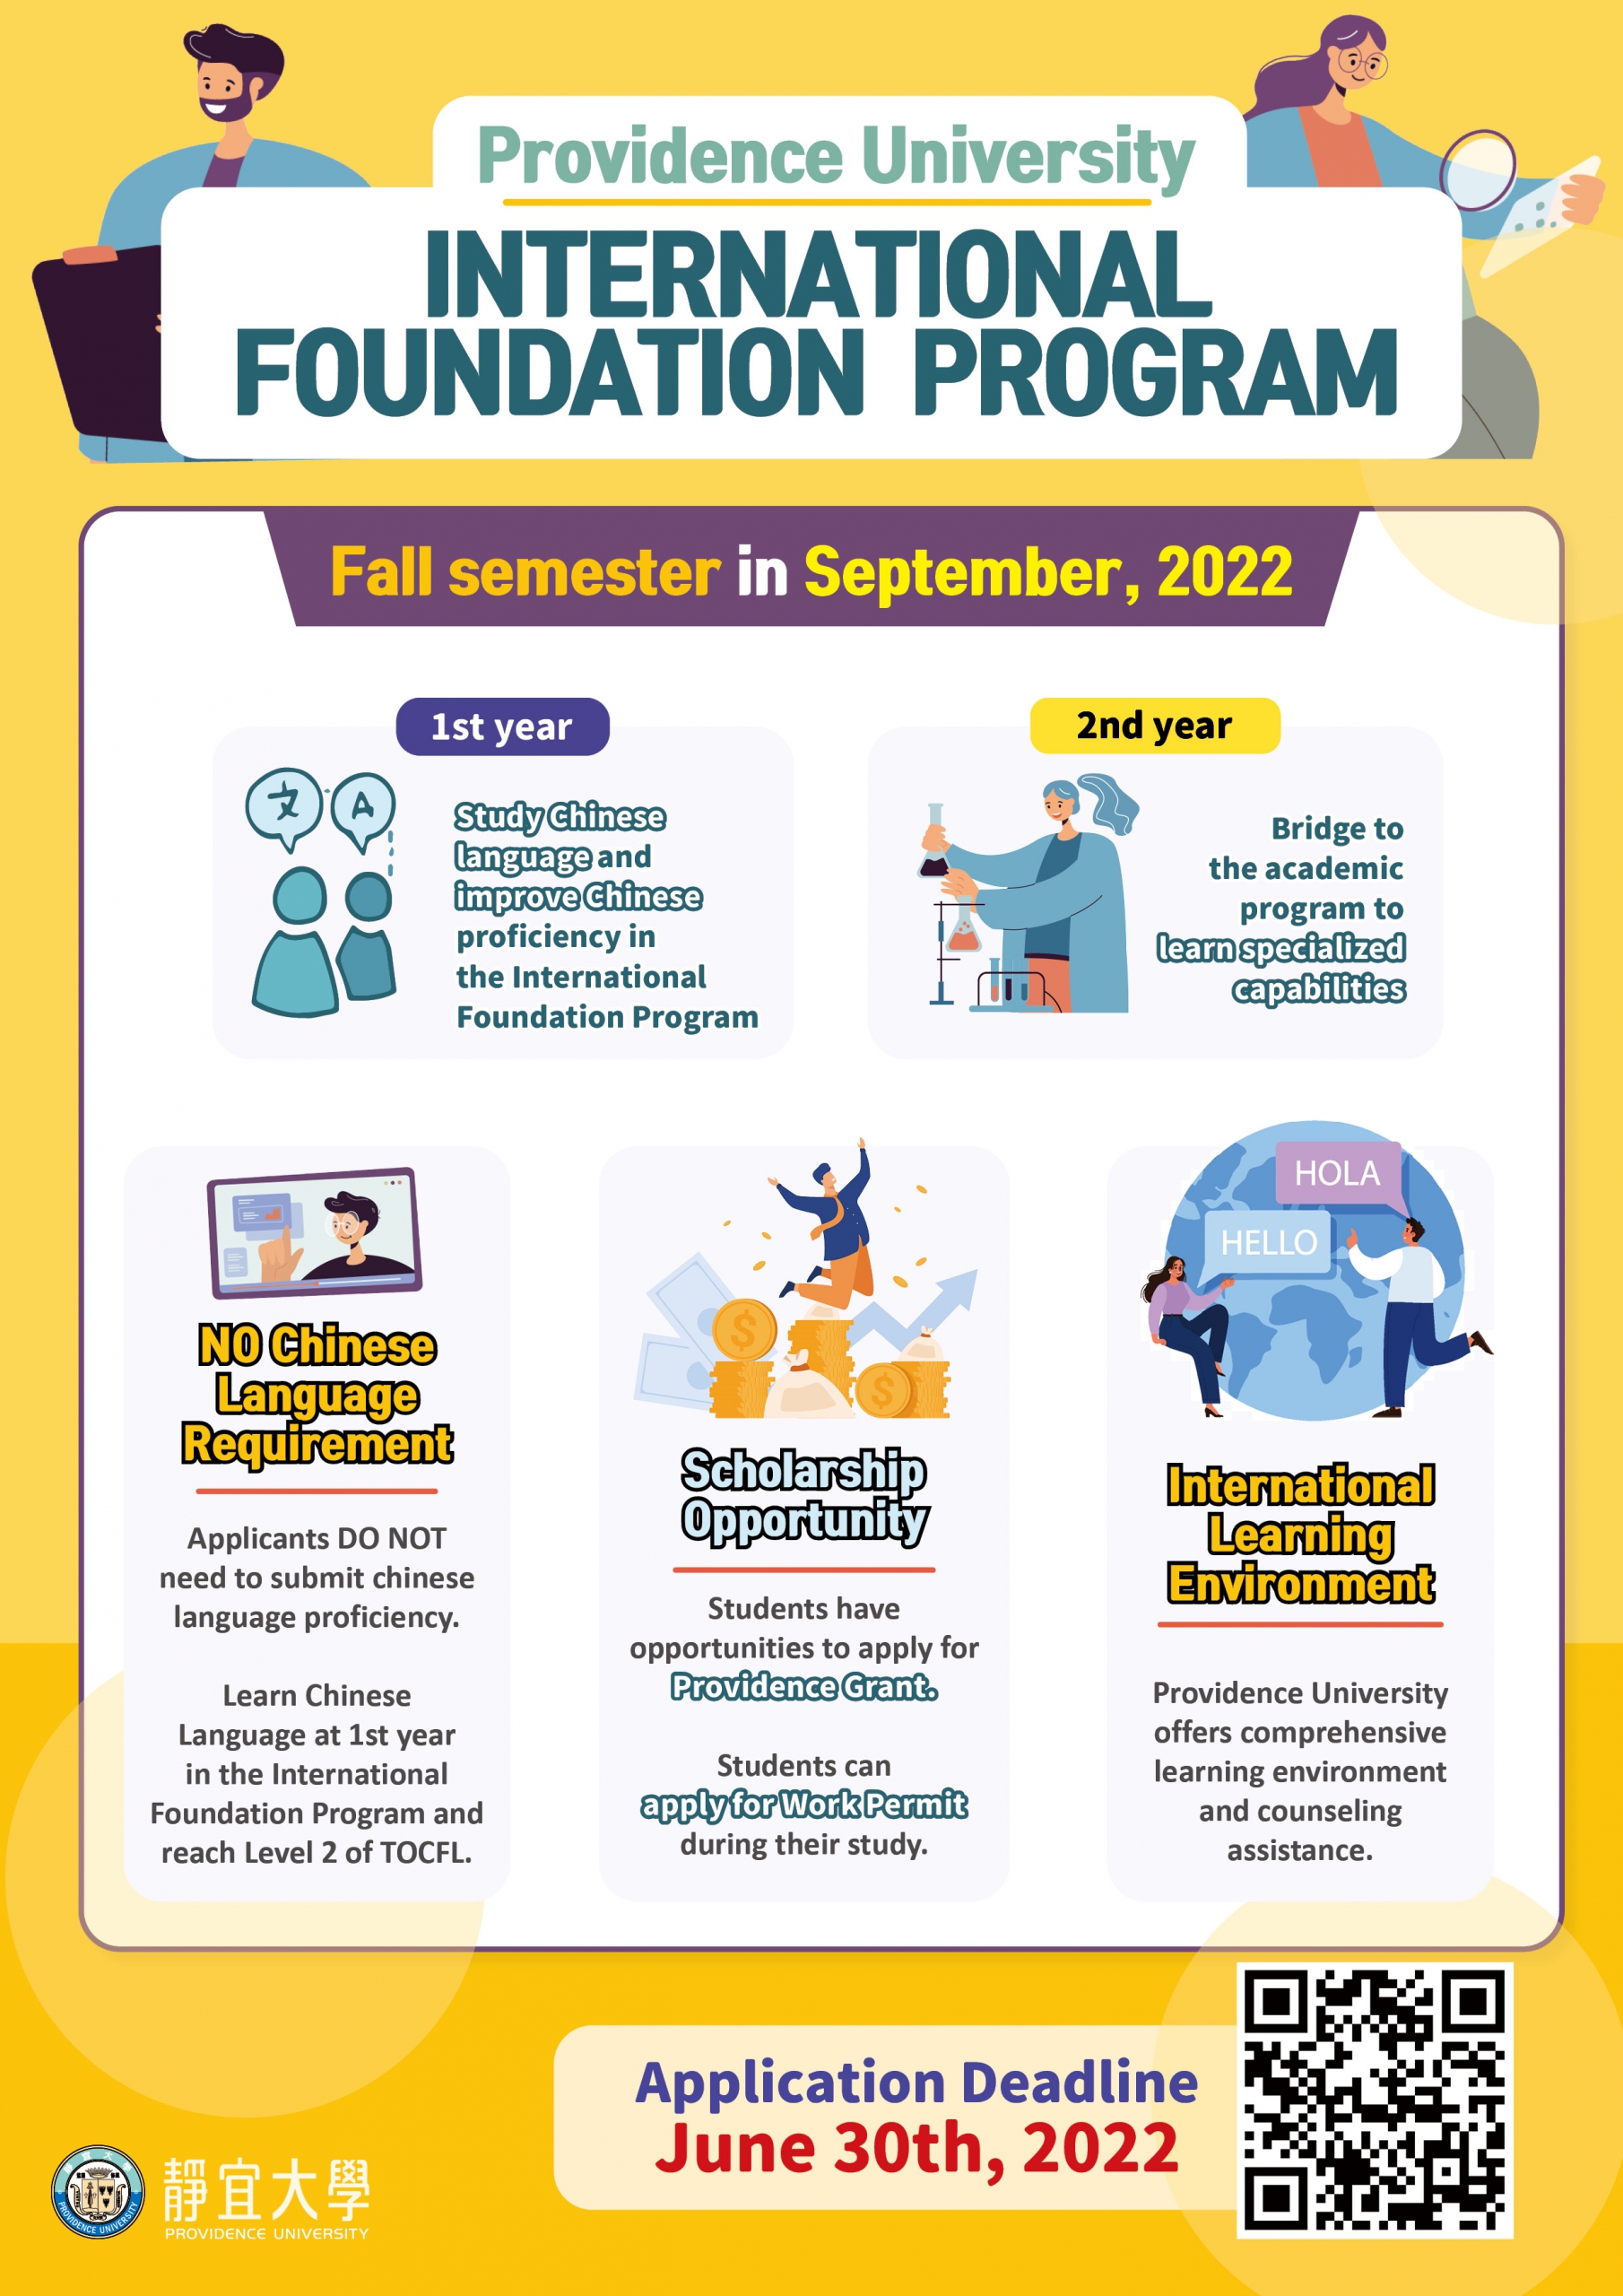 【2022.6.13】“International Foundation Program (IFP)” — Providence University